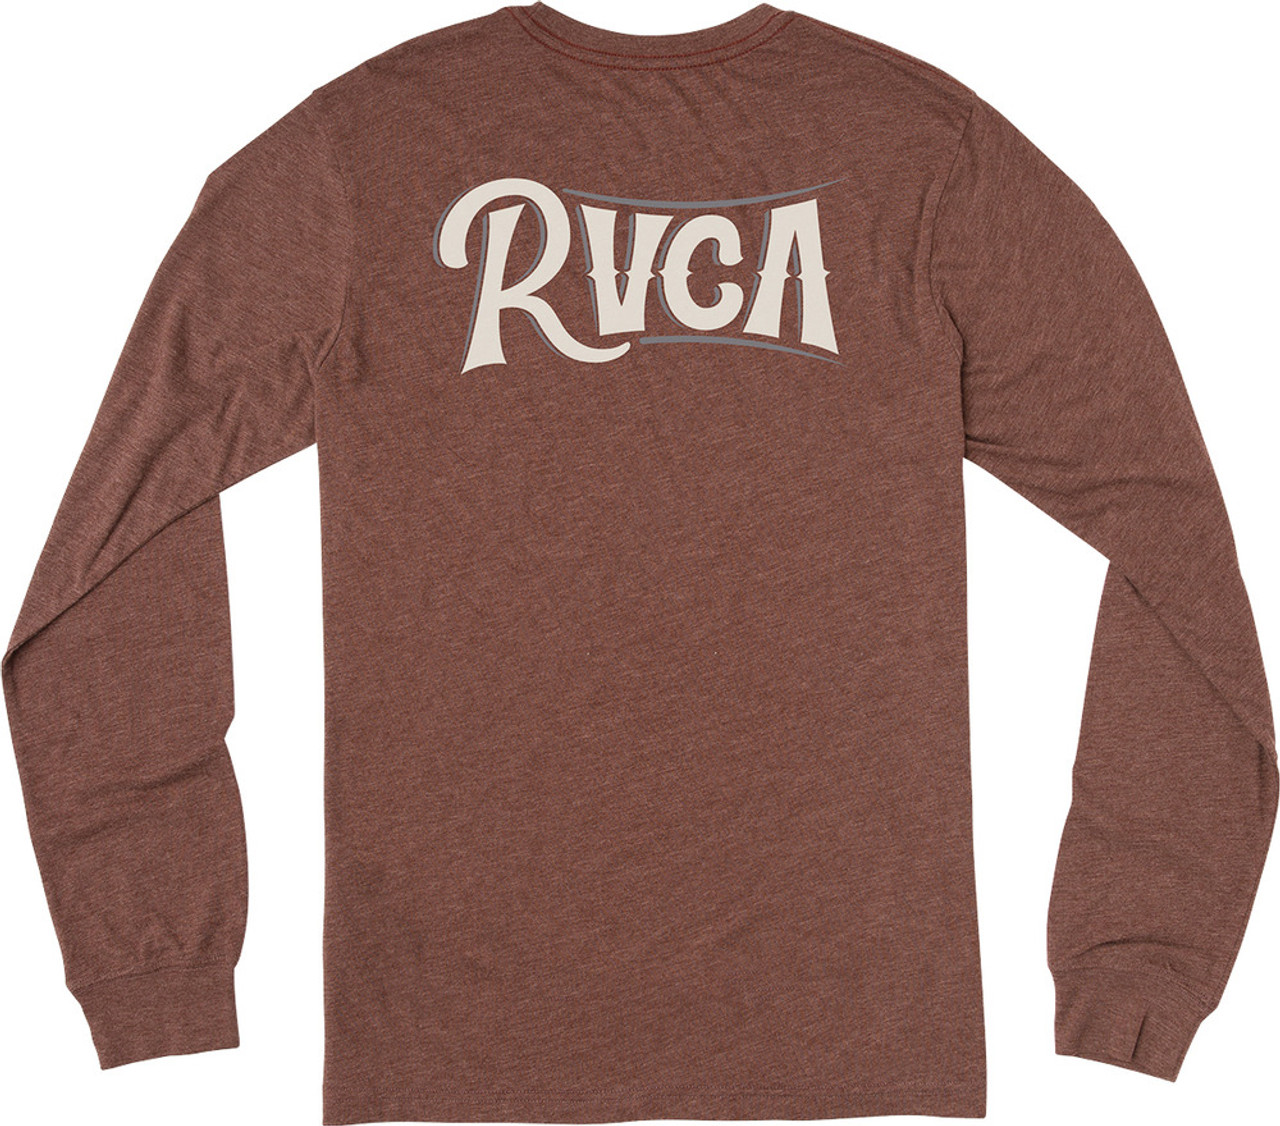 RVCA Sagebrush Longsleeve Tshirt Mens Maroon